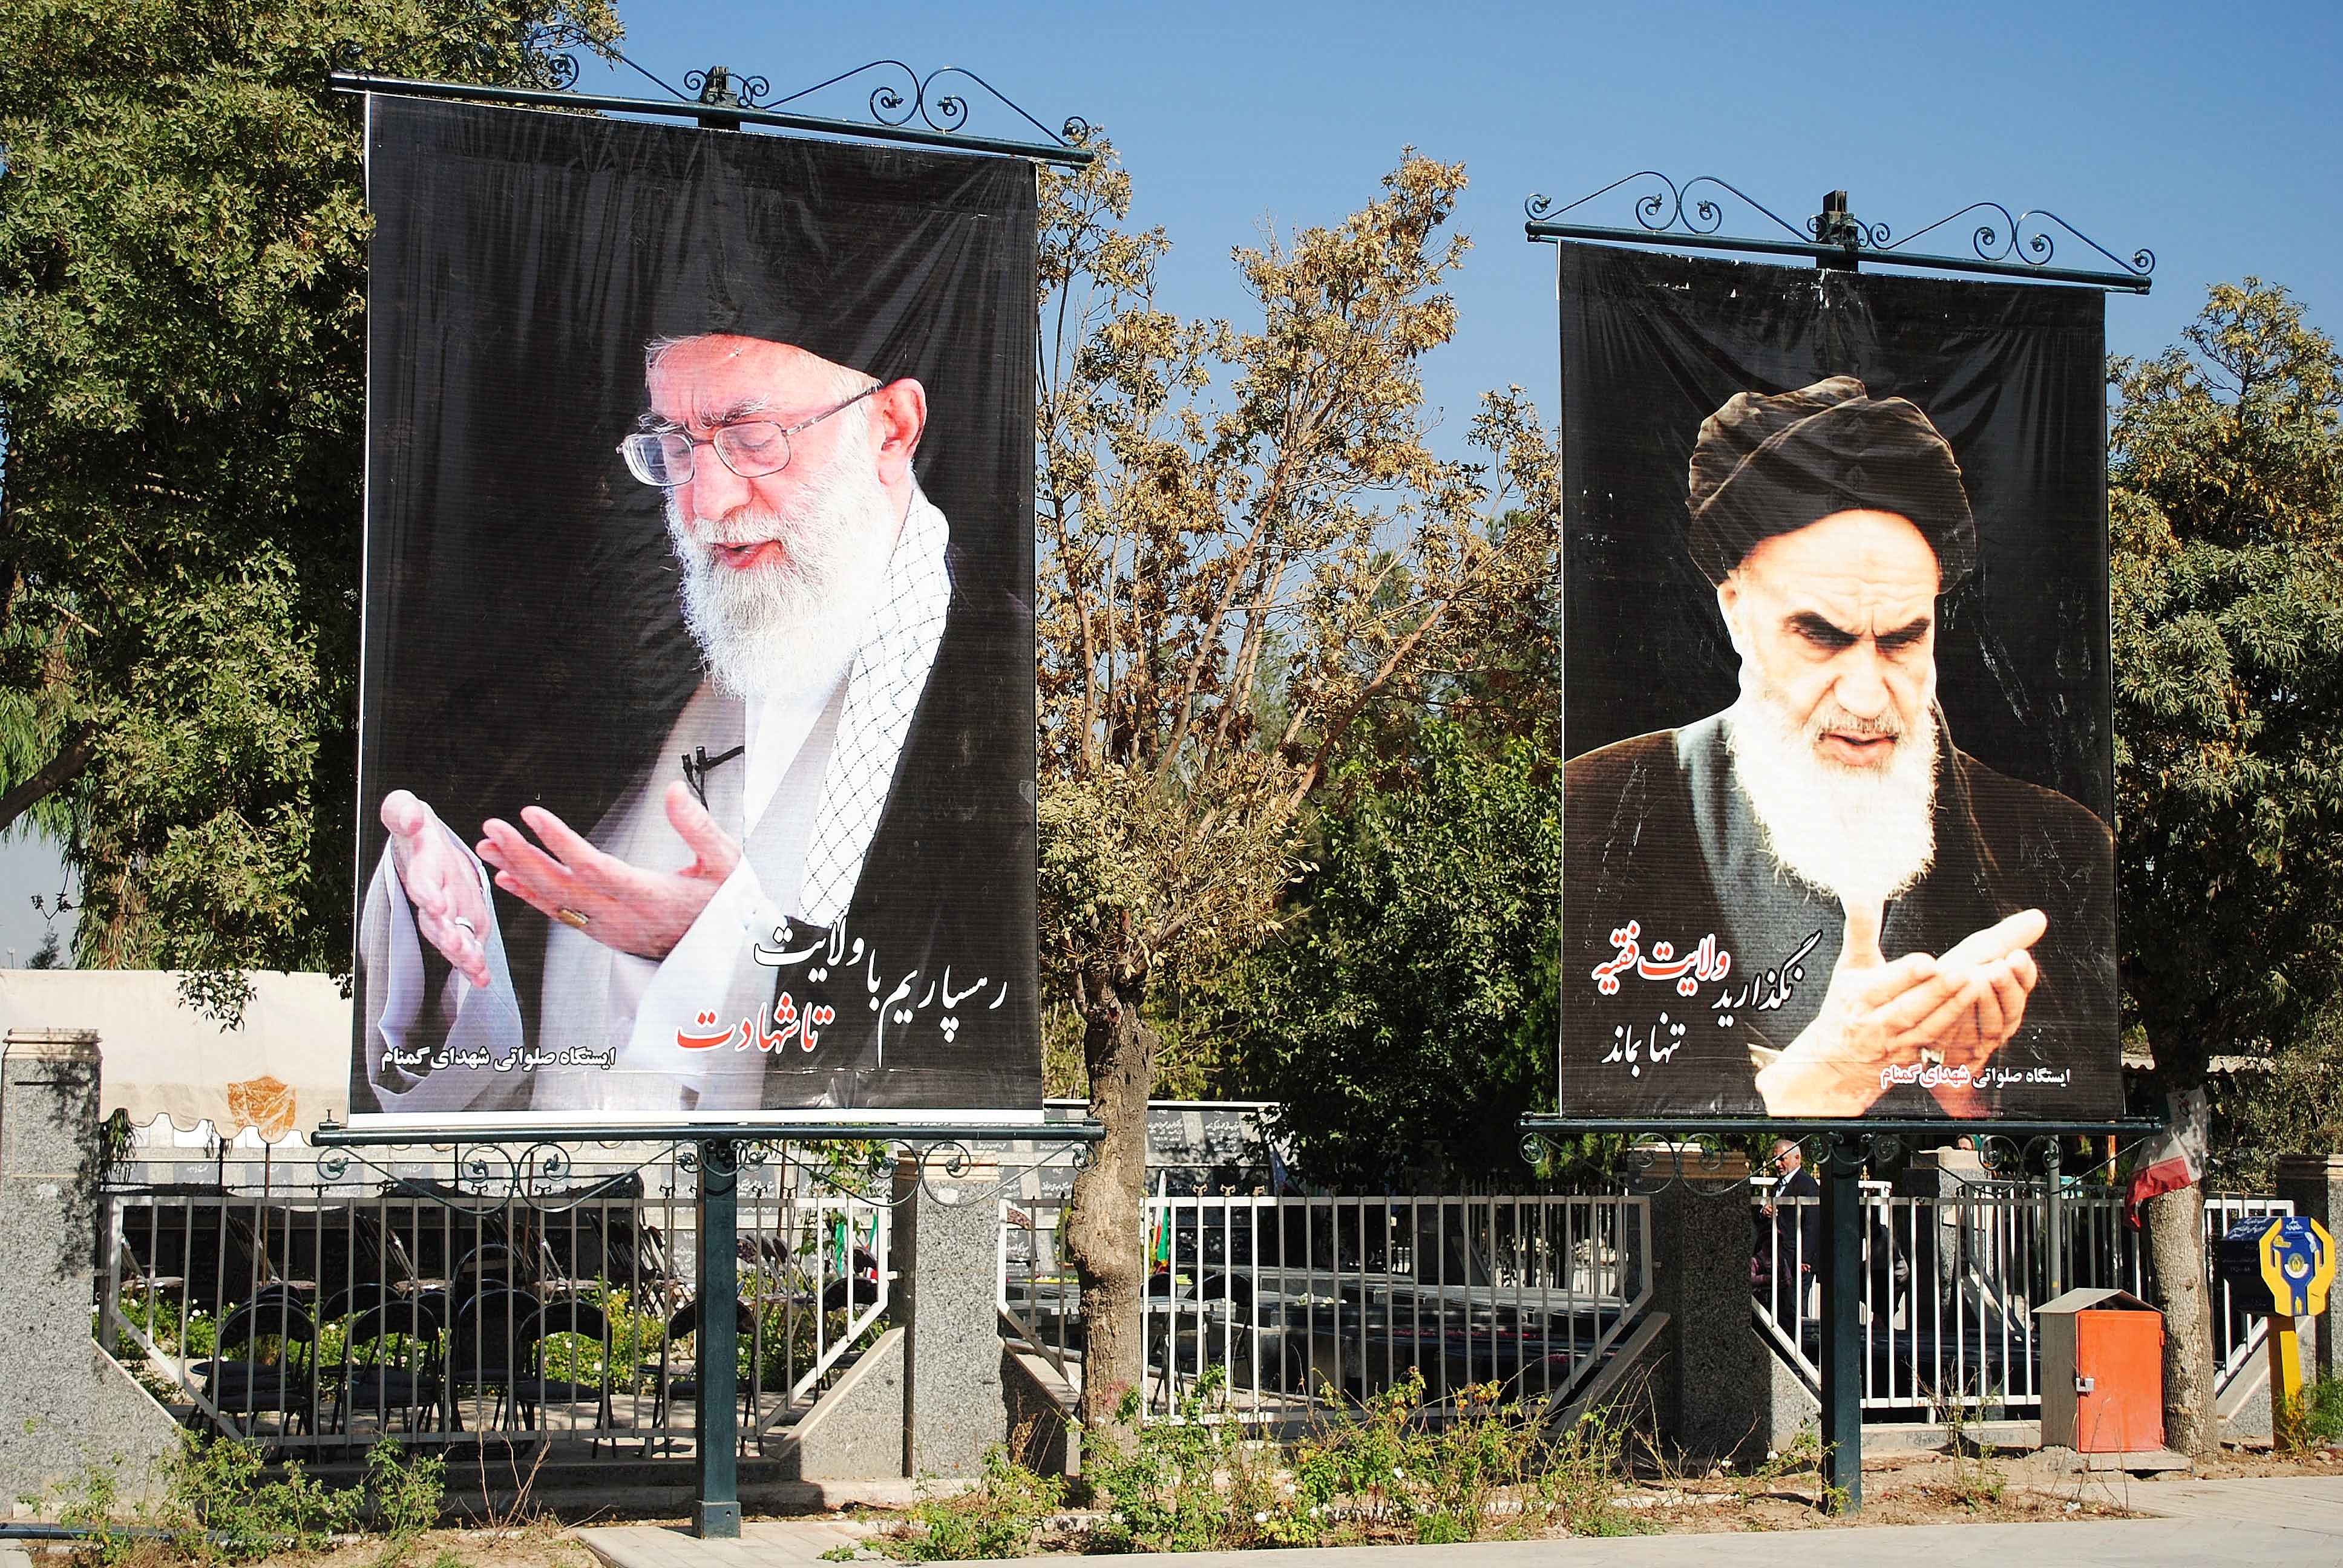 Iranian spiritual leader Ali Khamenei and the former leader Ayatollah Khomeini.